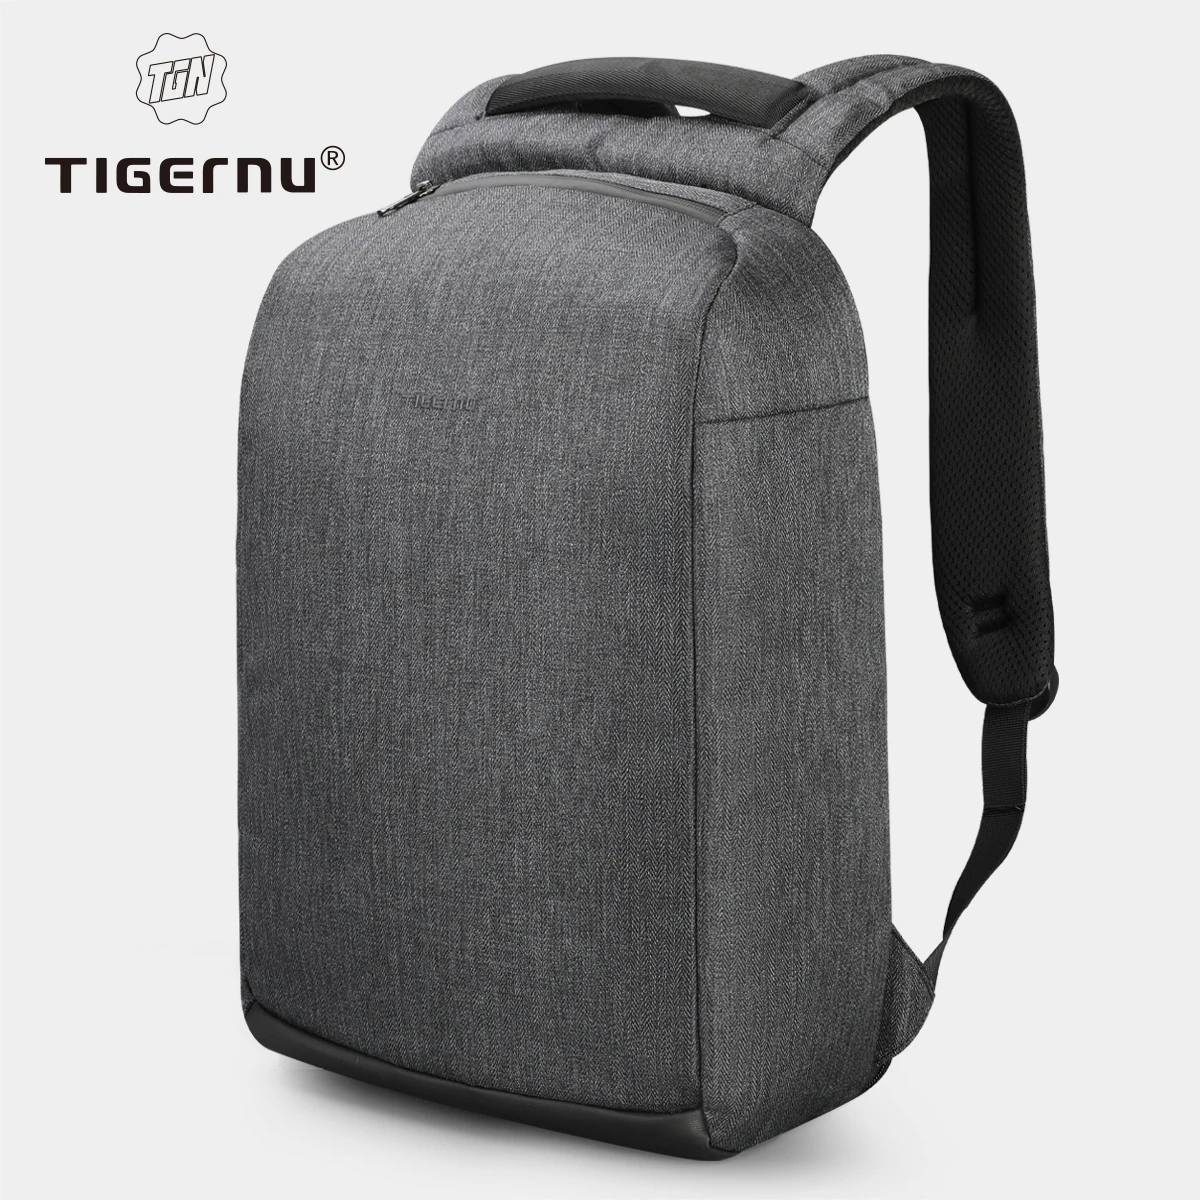 Tigernu-mochila informal impermeable para hombre, antirrobo para ordenador portátil de 15,6 pulgadas...